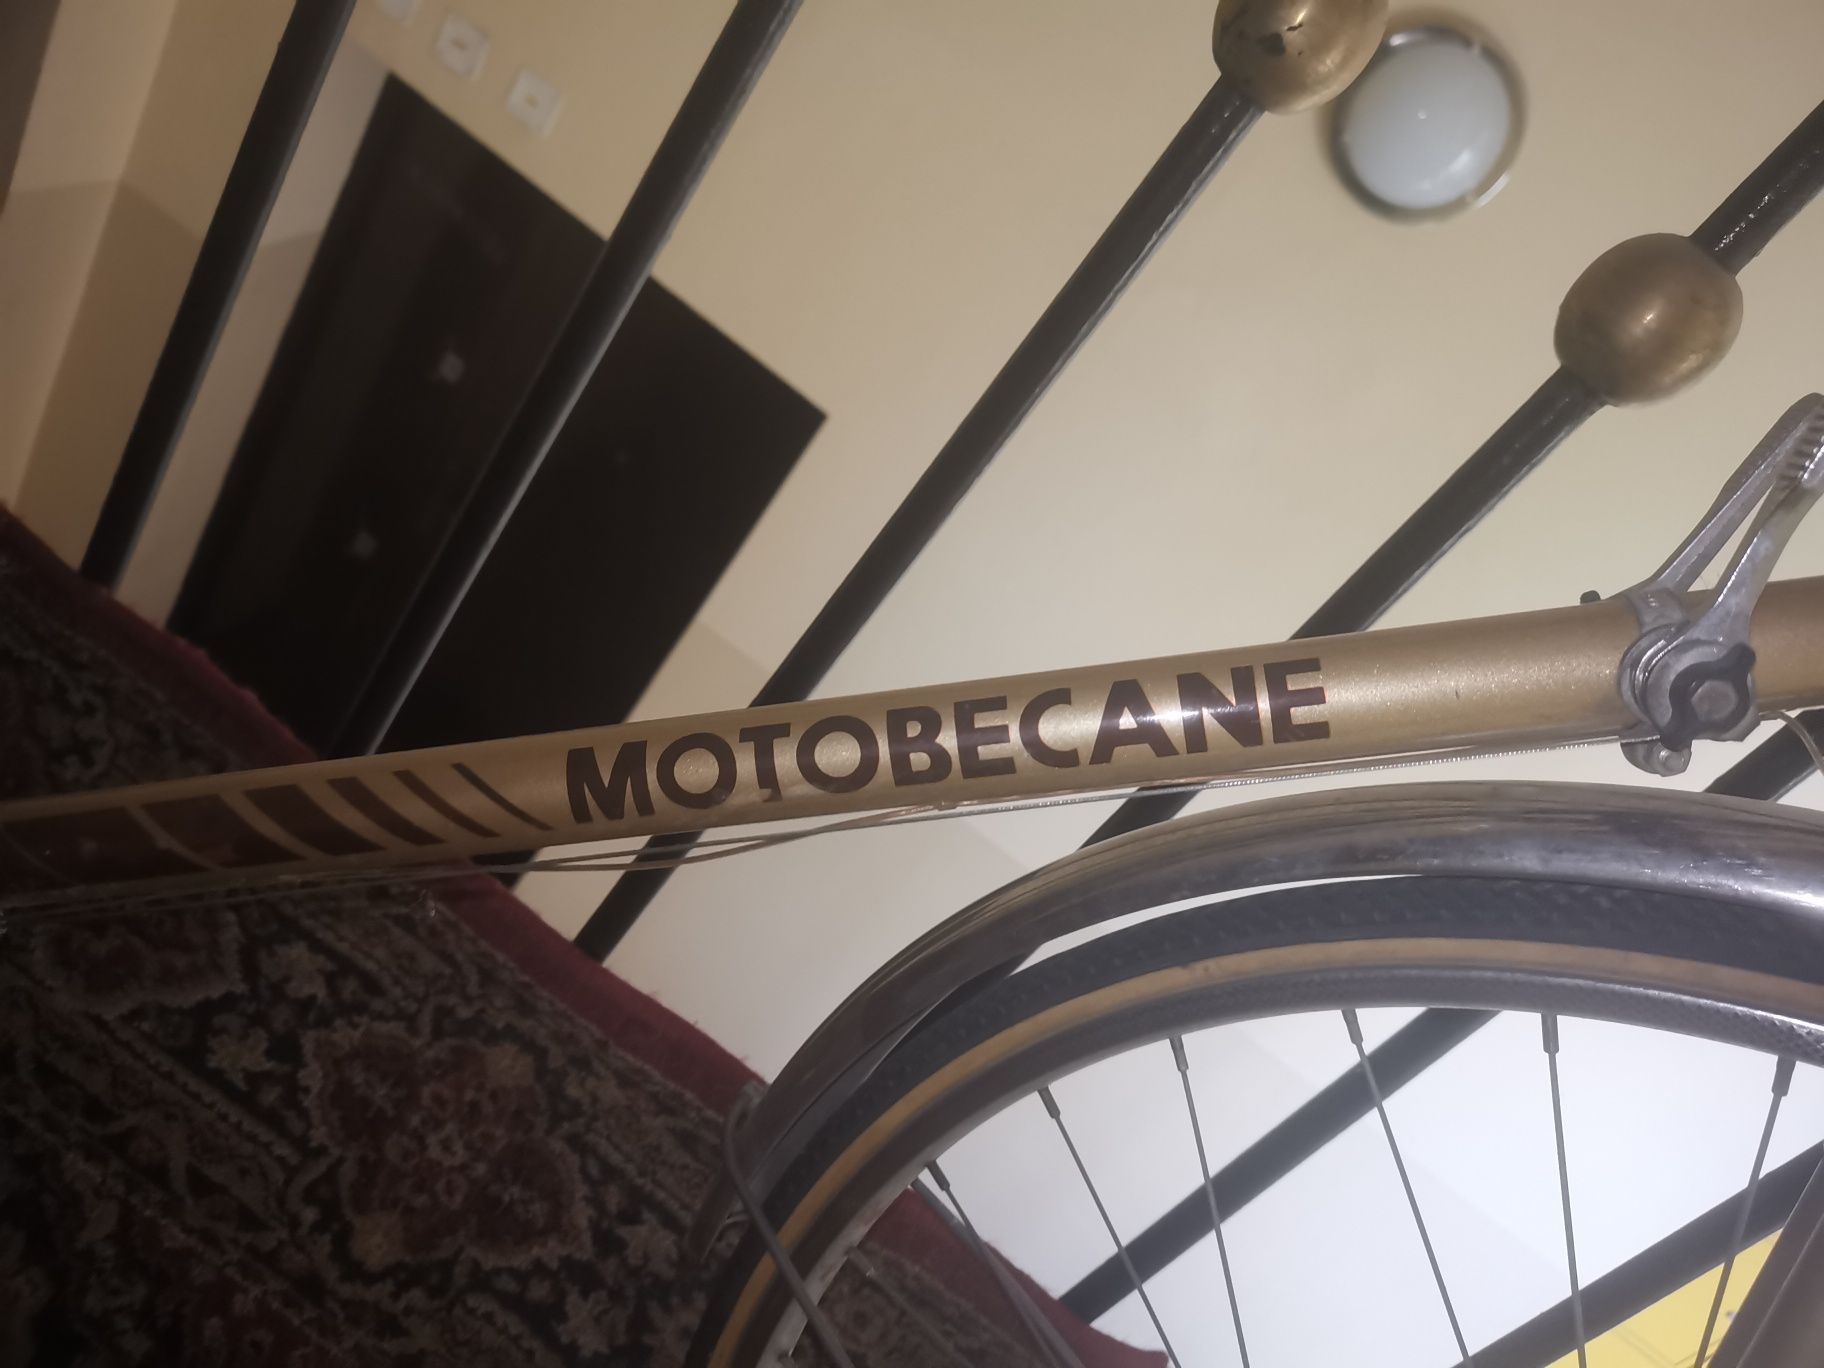 Rower MotoBecane